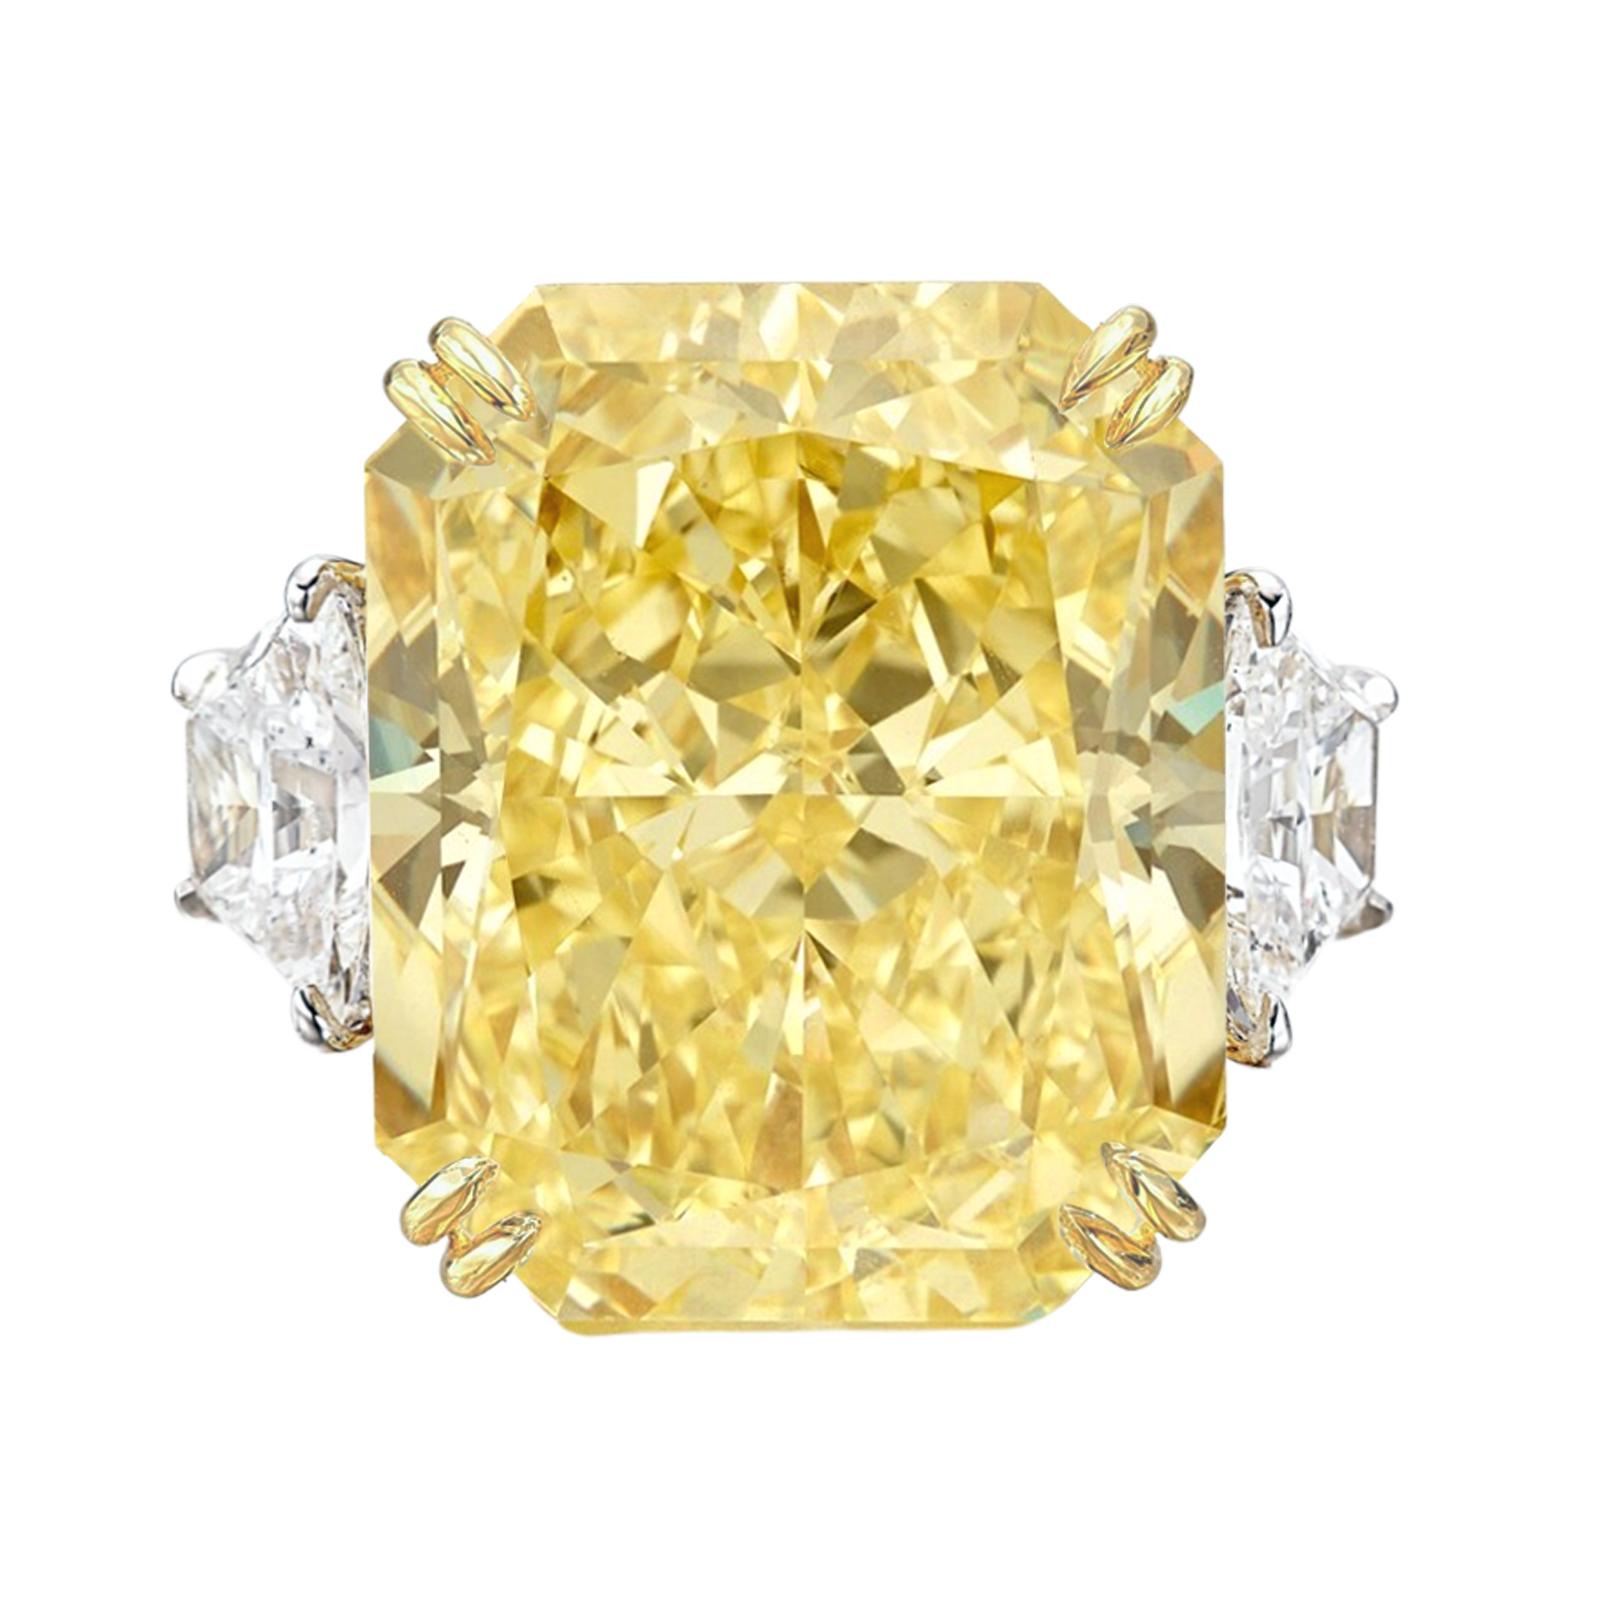 10 carat canary diamond